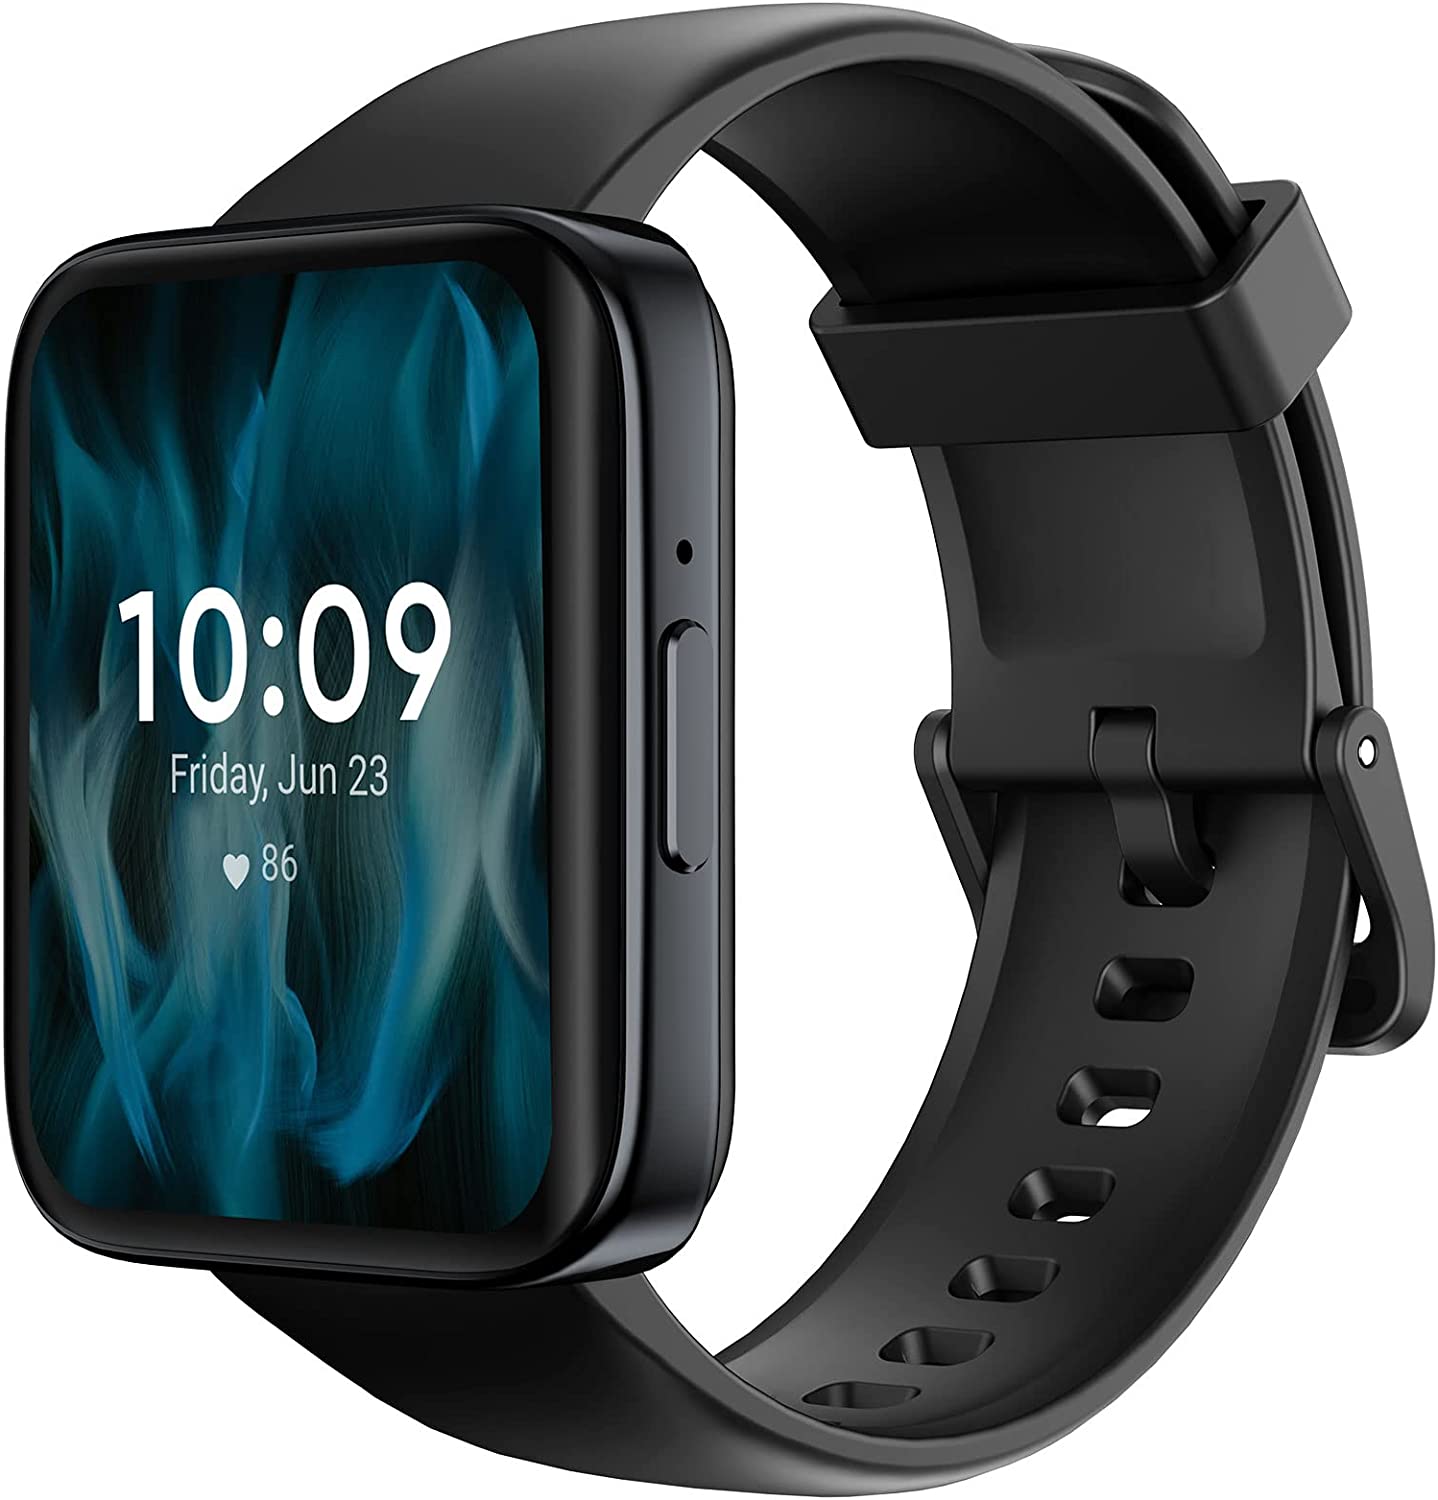 MVEFOIT 1.7'' Phone Smart Watch Answer/Make Calls, Fitness Watch w